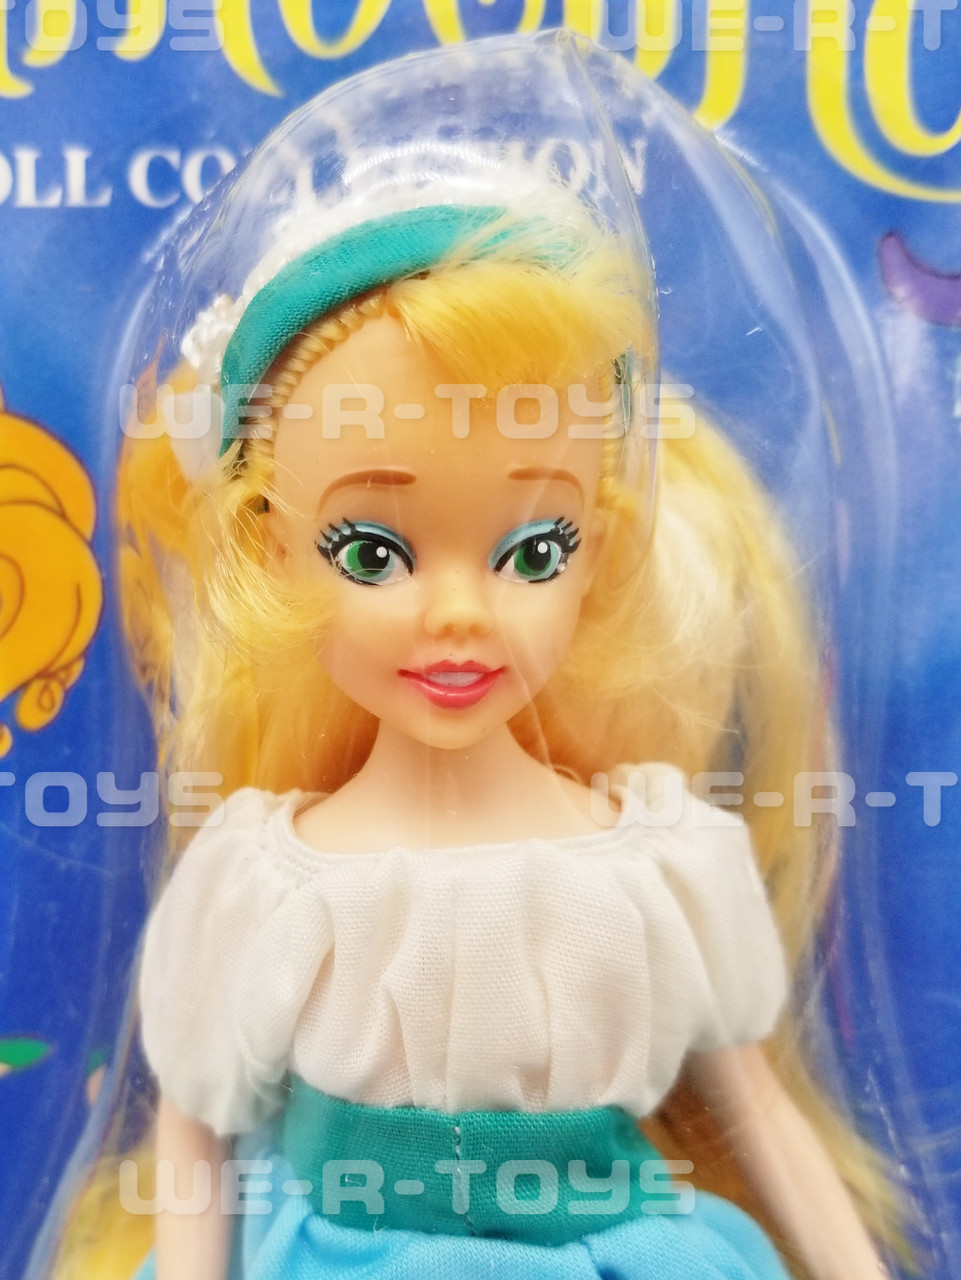 barbie thumbelina doll